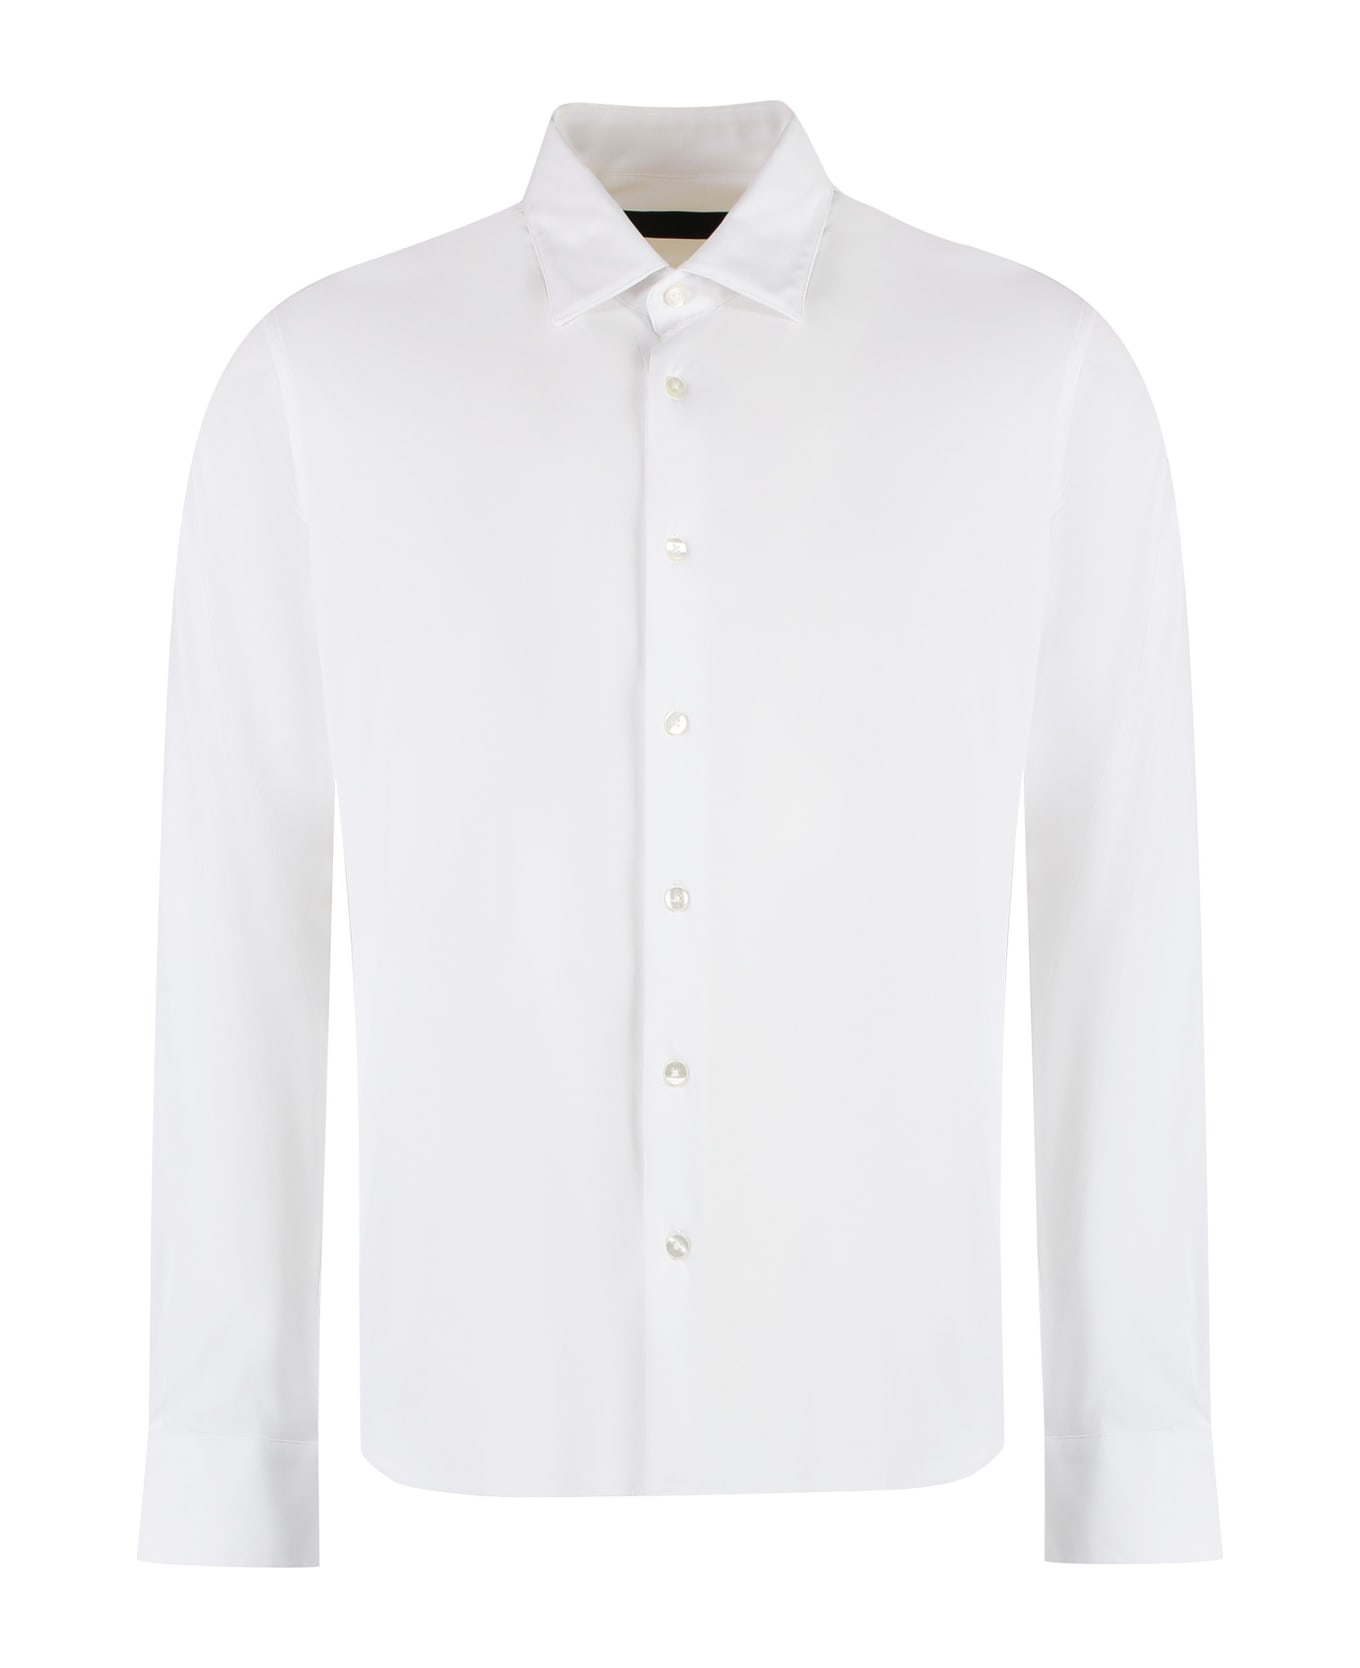 RRD - Roberto Ricci Design Technical Fabric Shirt - White